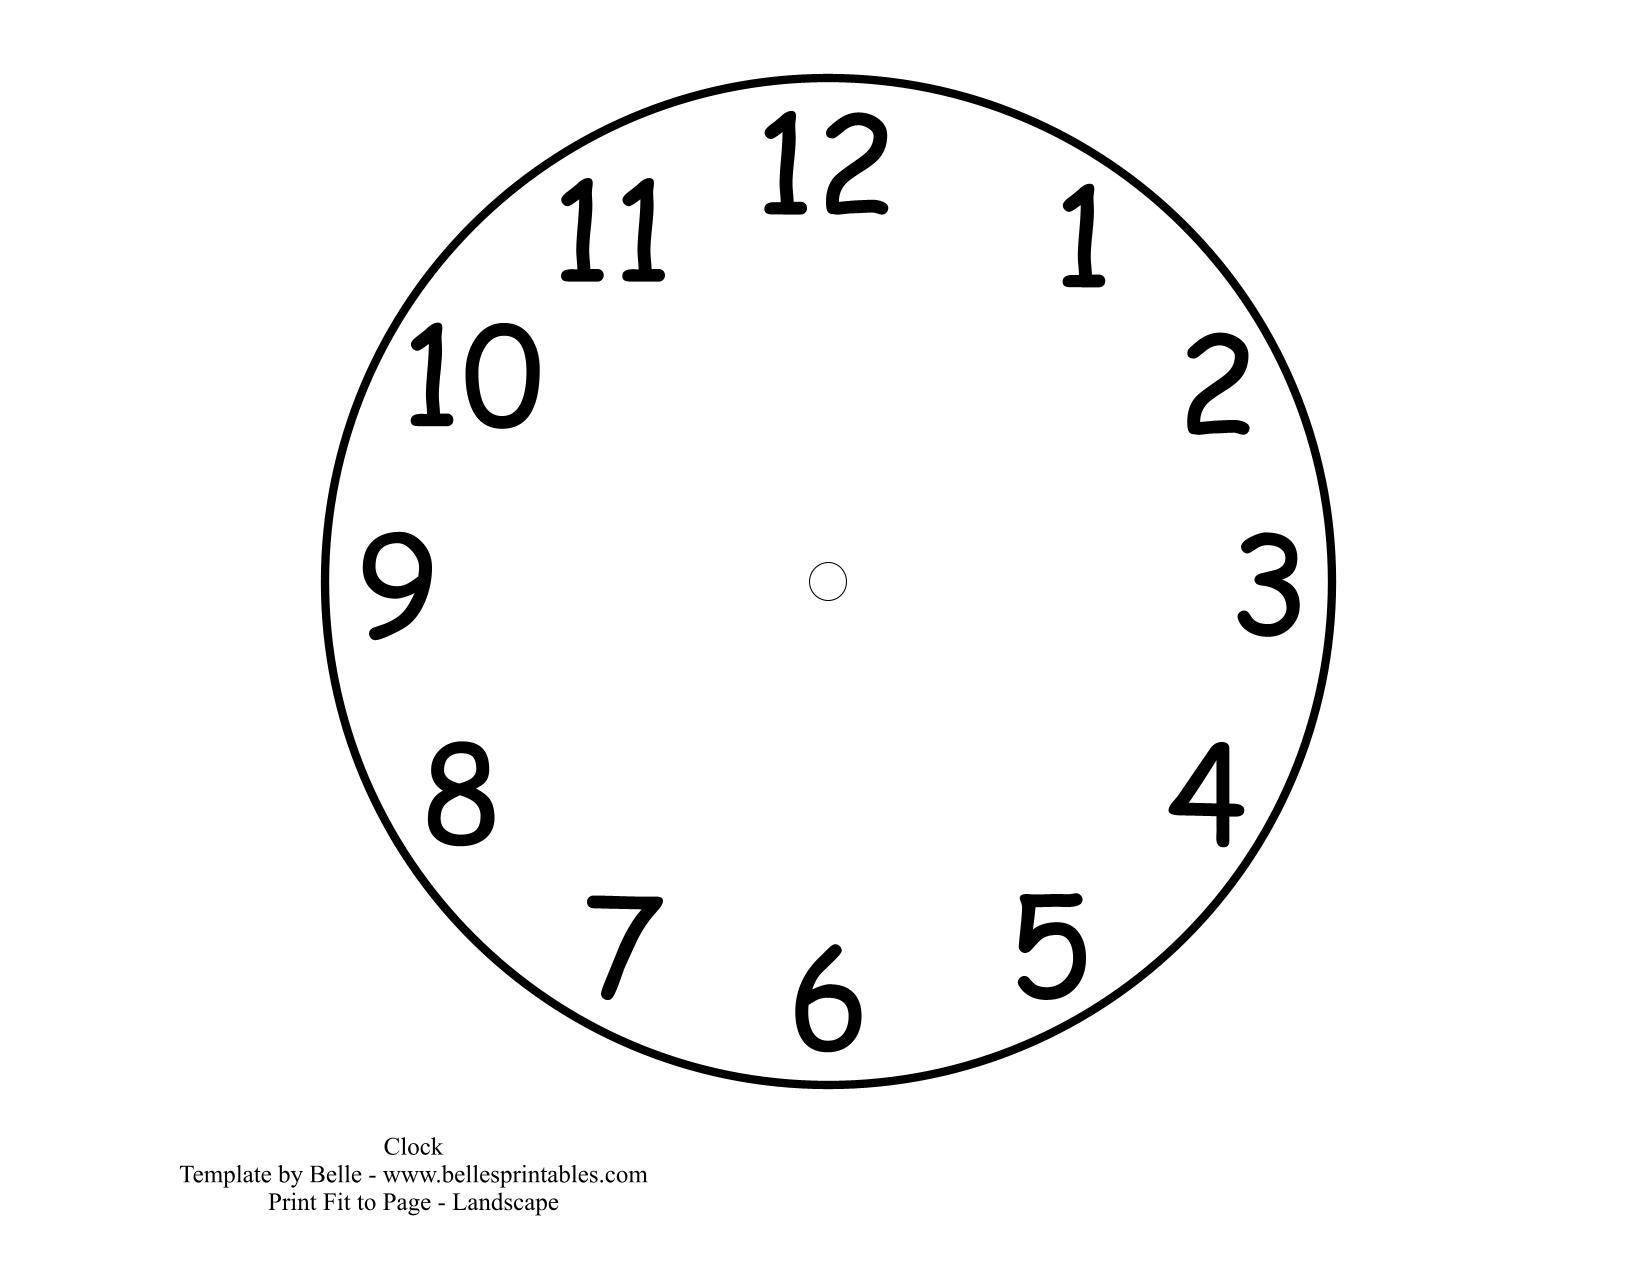 blank-analog-clock-a-versatile-tool-for-teaching-time